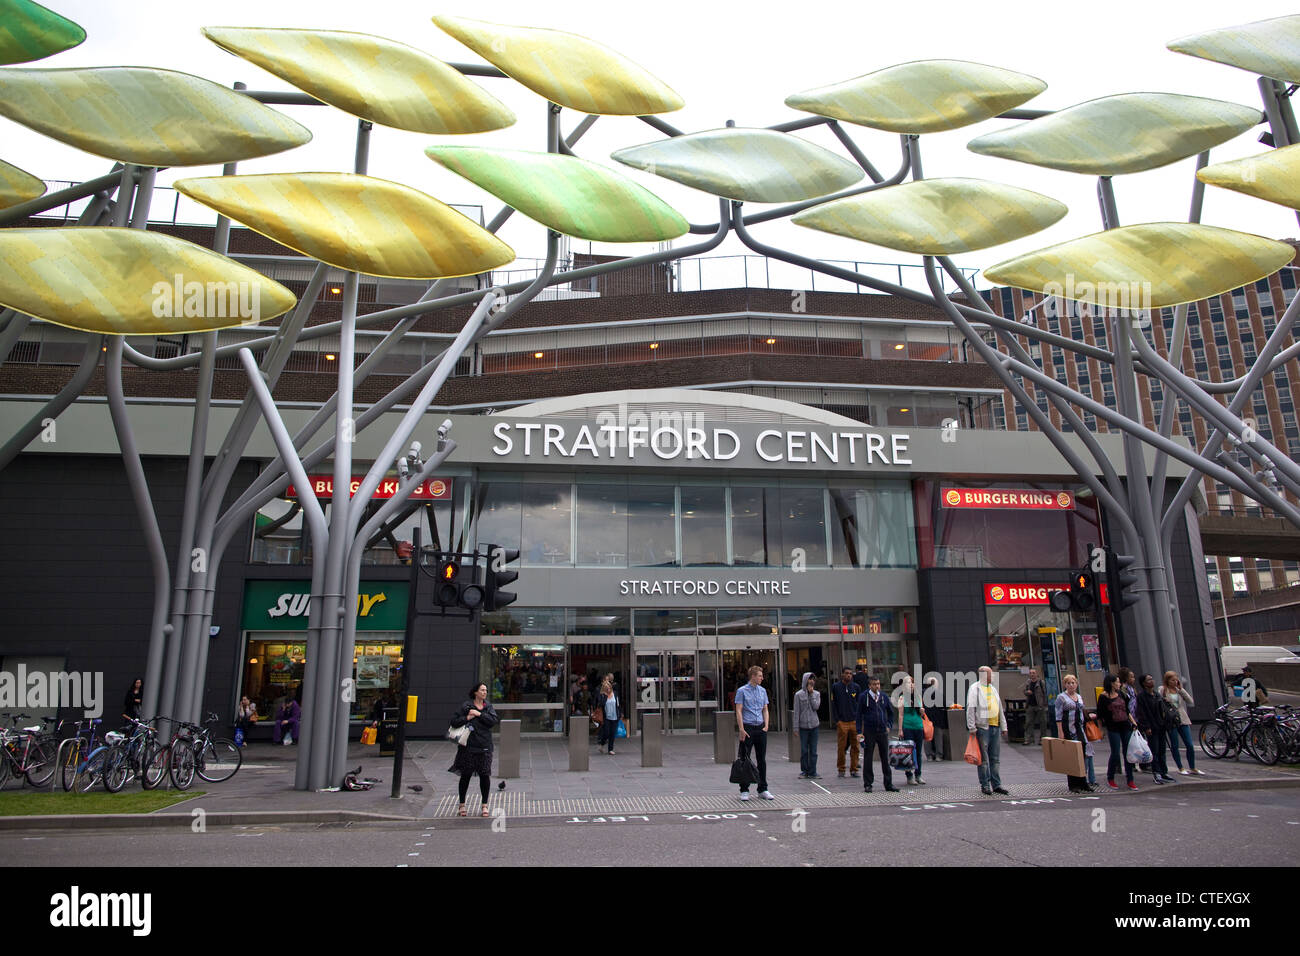 Stratford Centre Shopping Mall, Stratford East London, England, UK Stockfoto